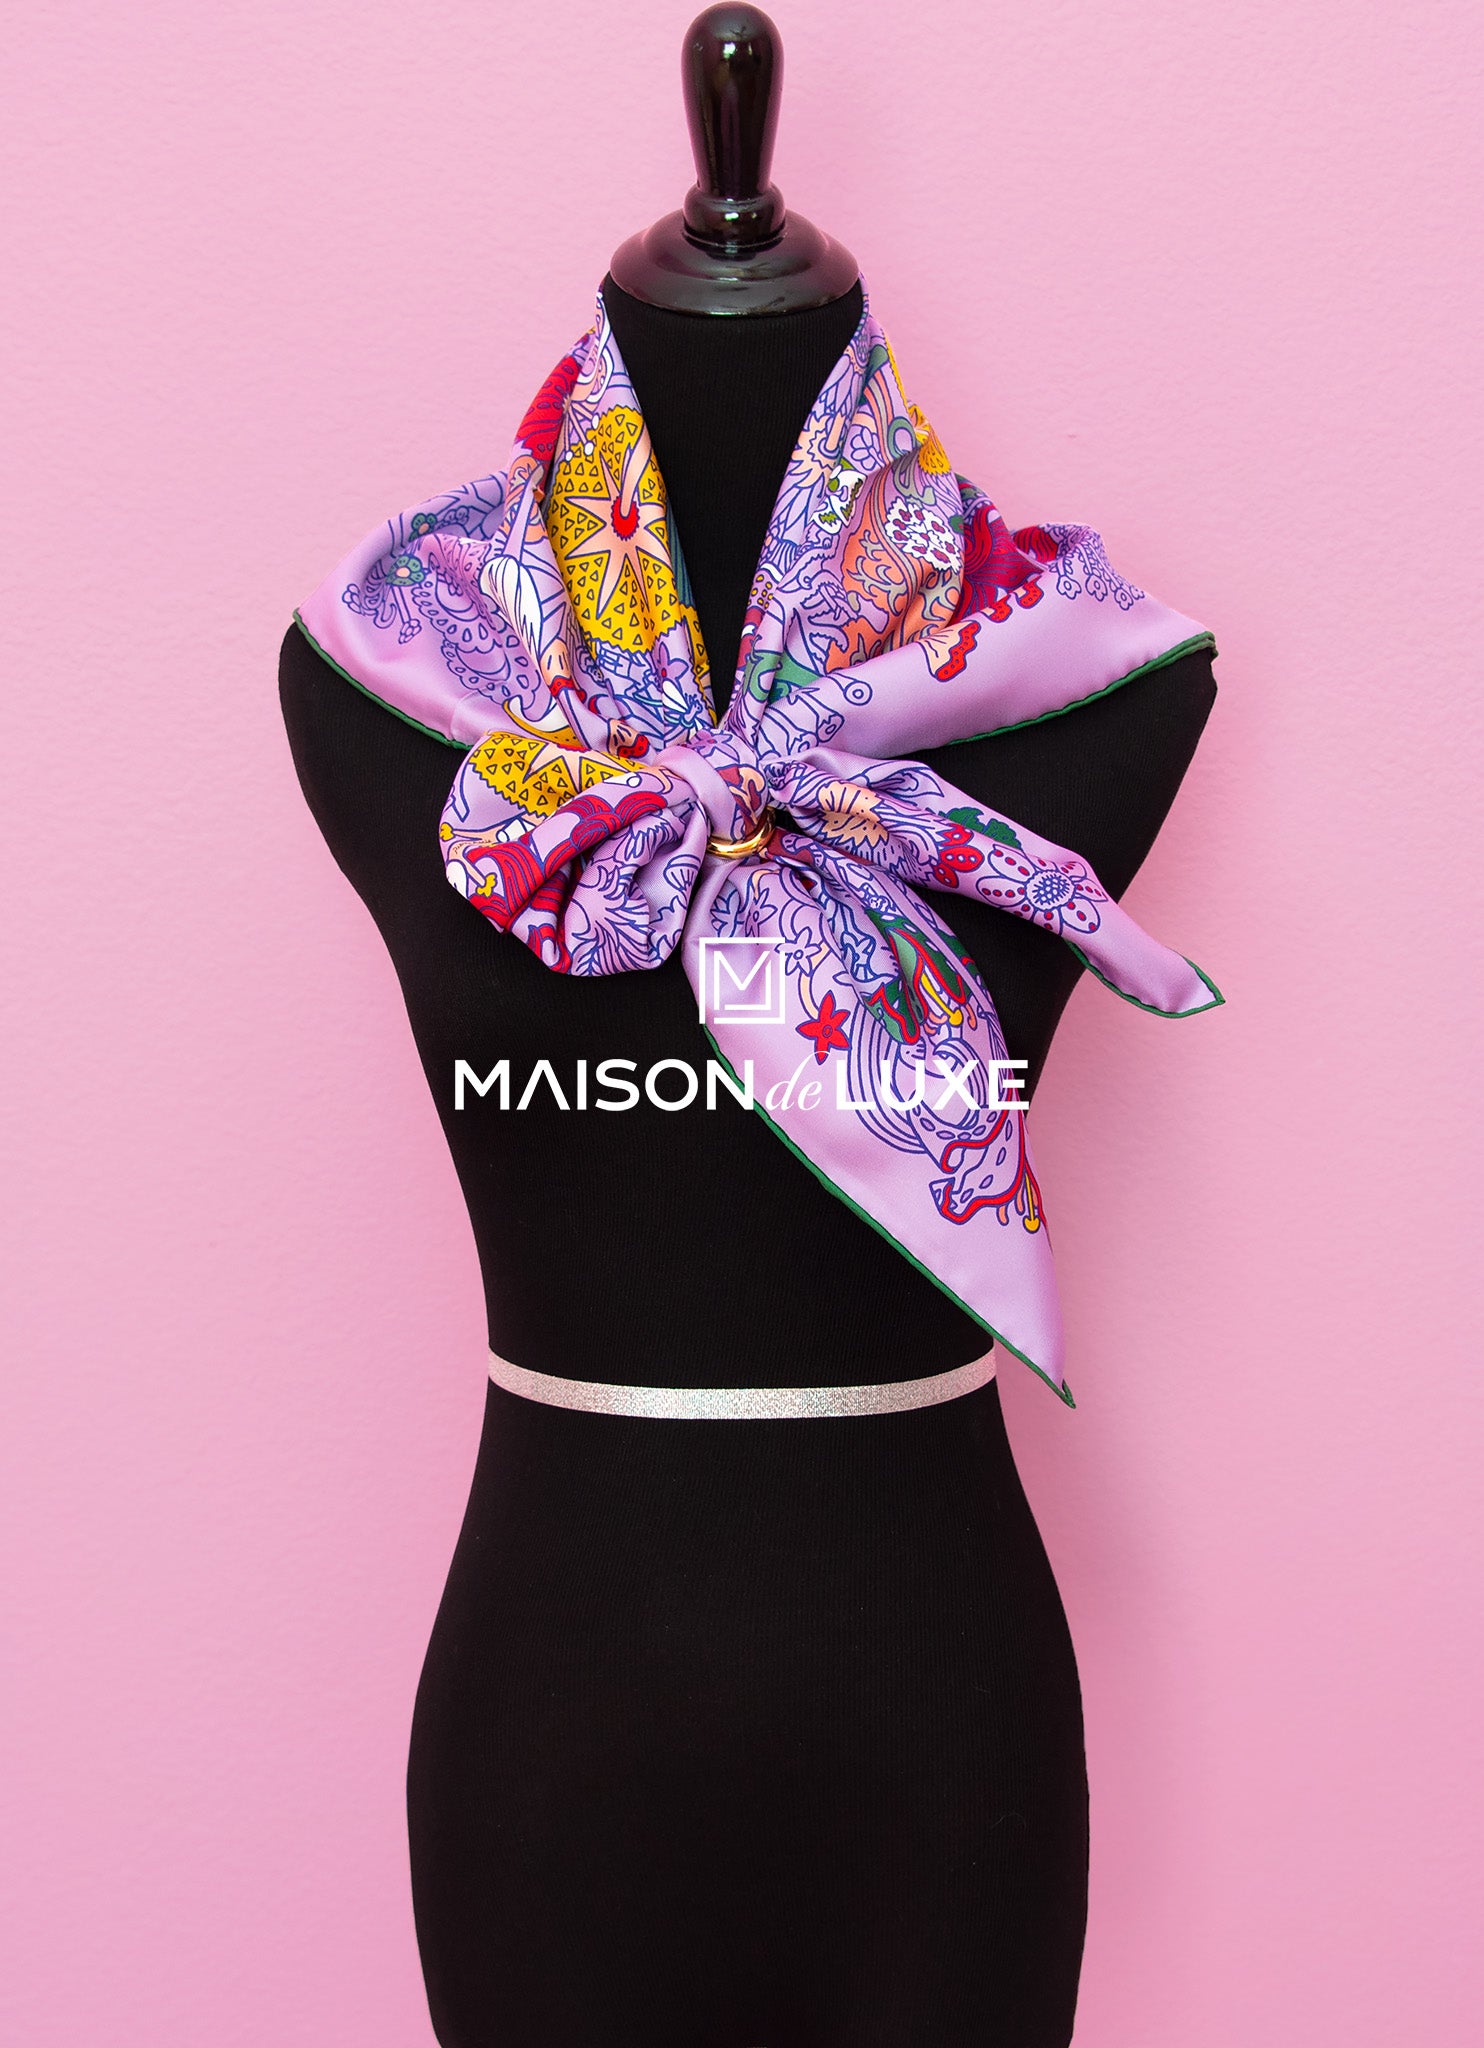 The artistry of Hermès' latest scarves